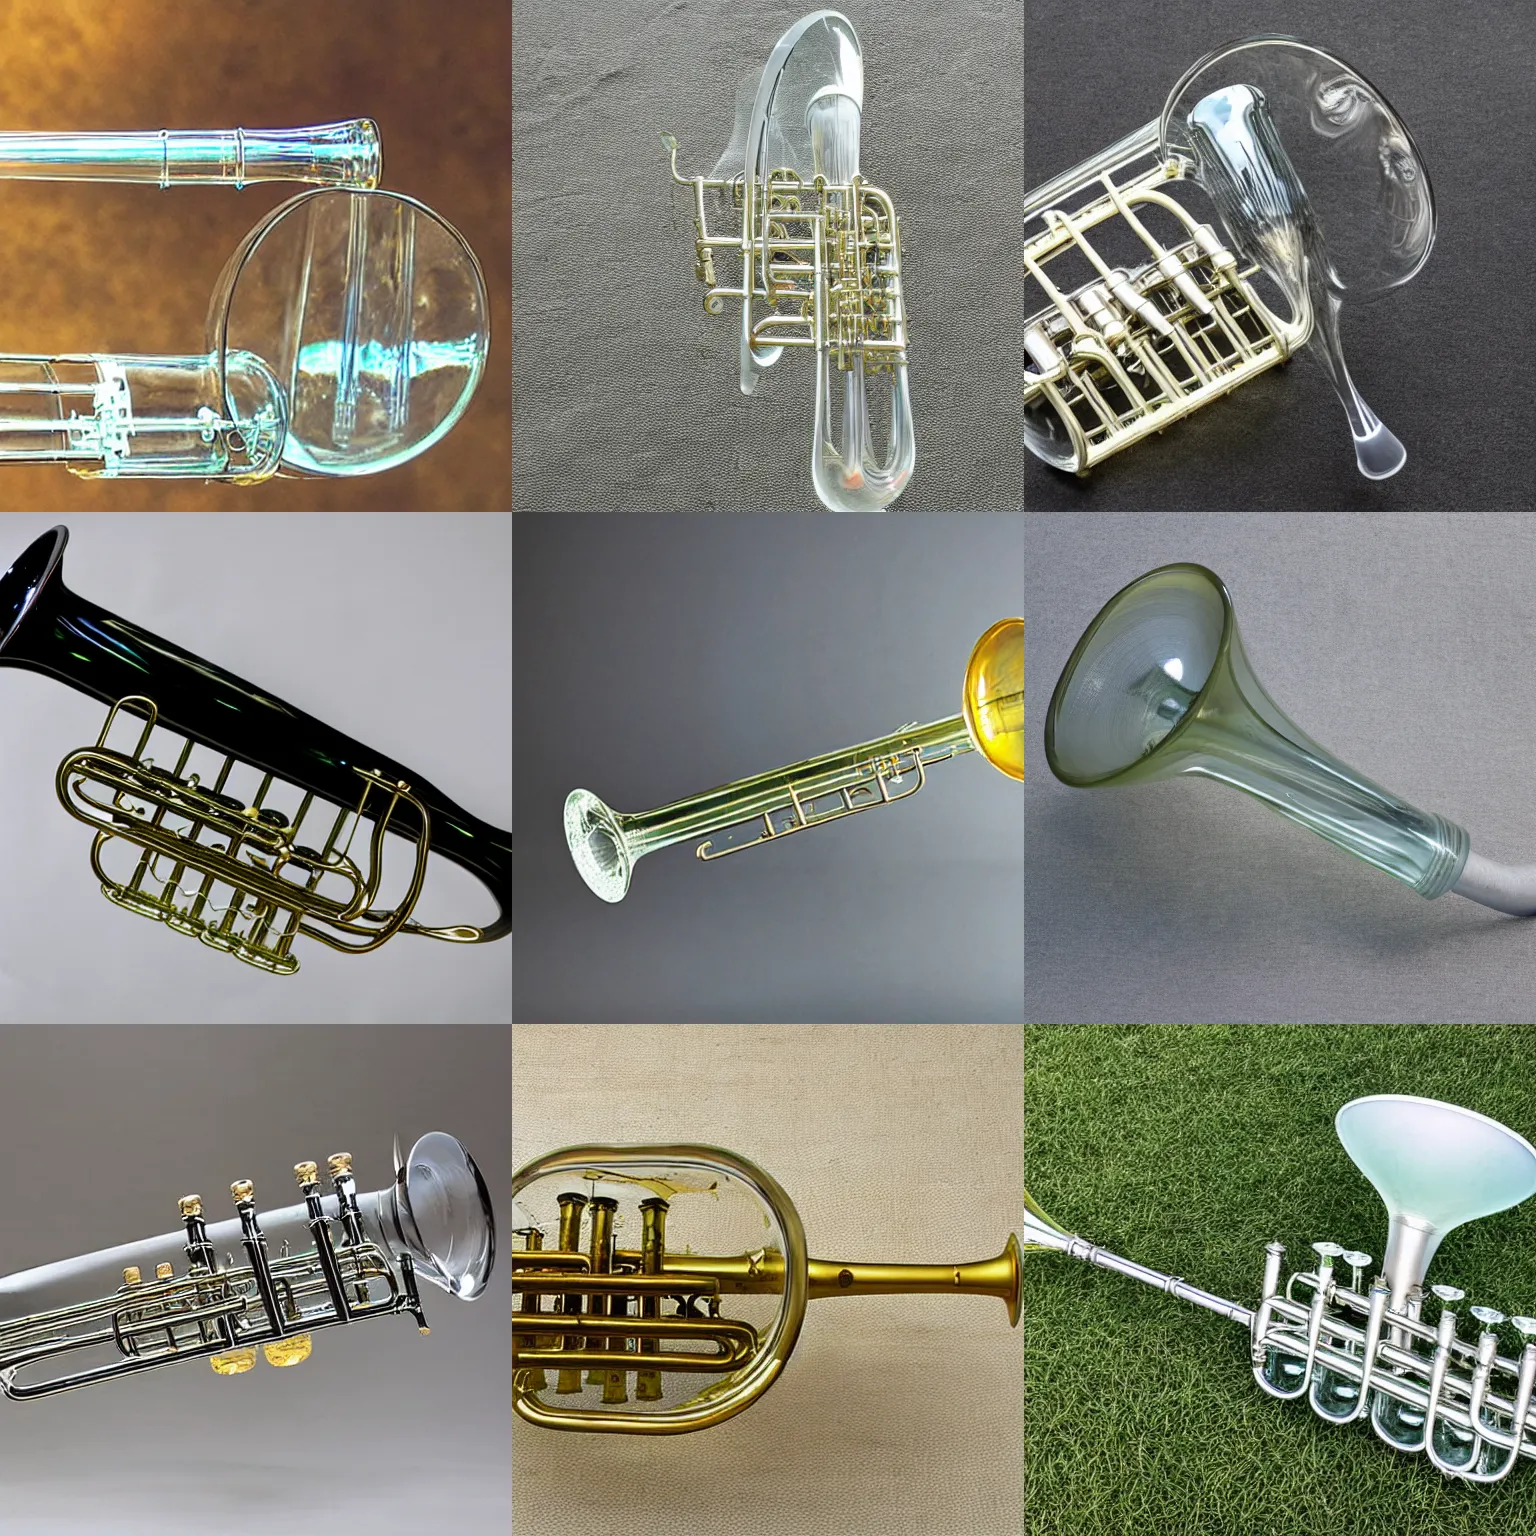 Prompt: a transparent glass trumpet